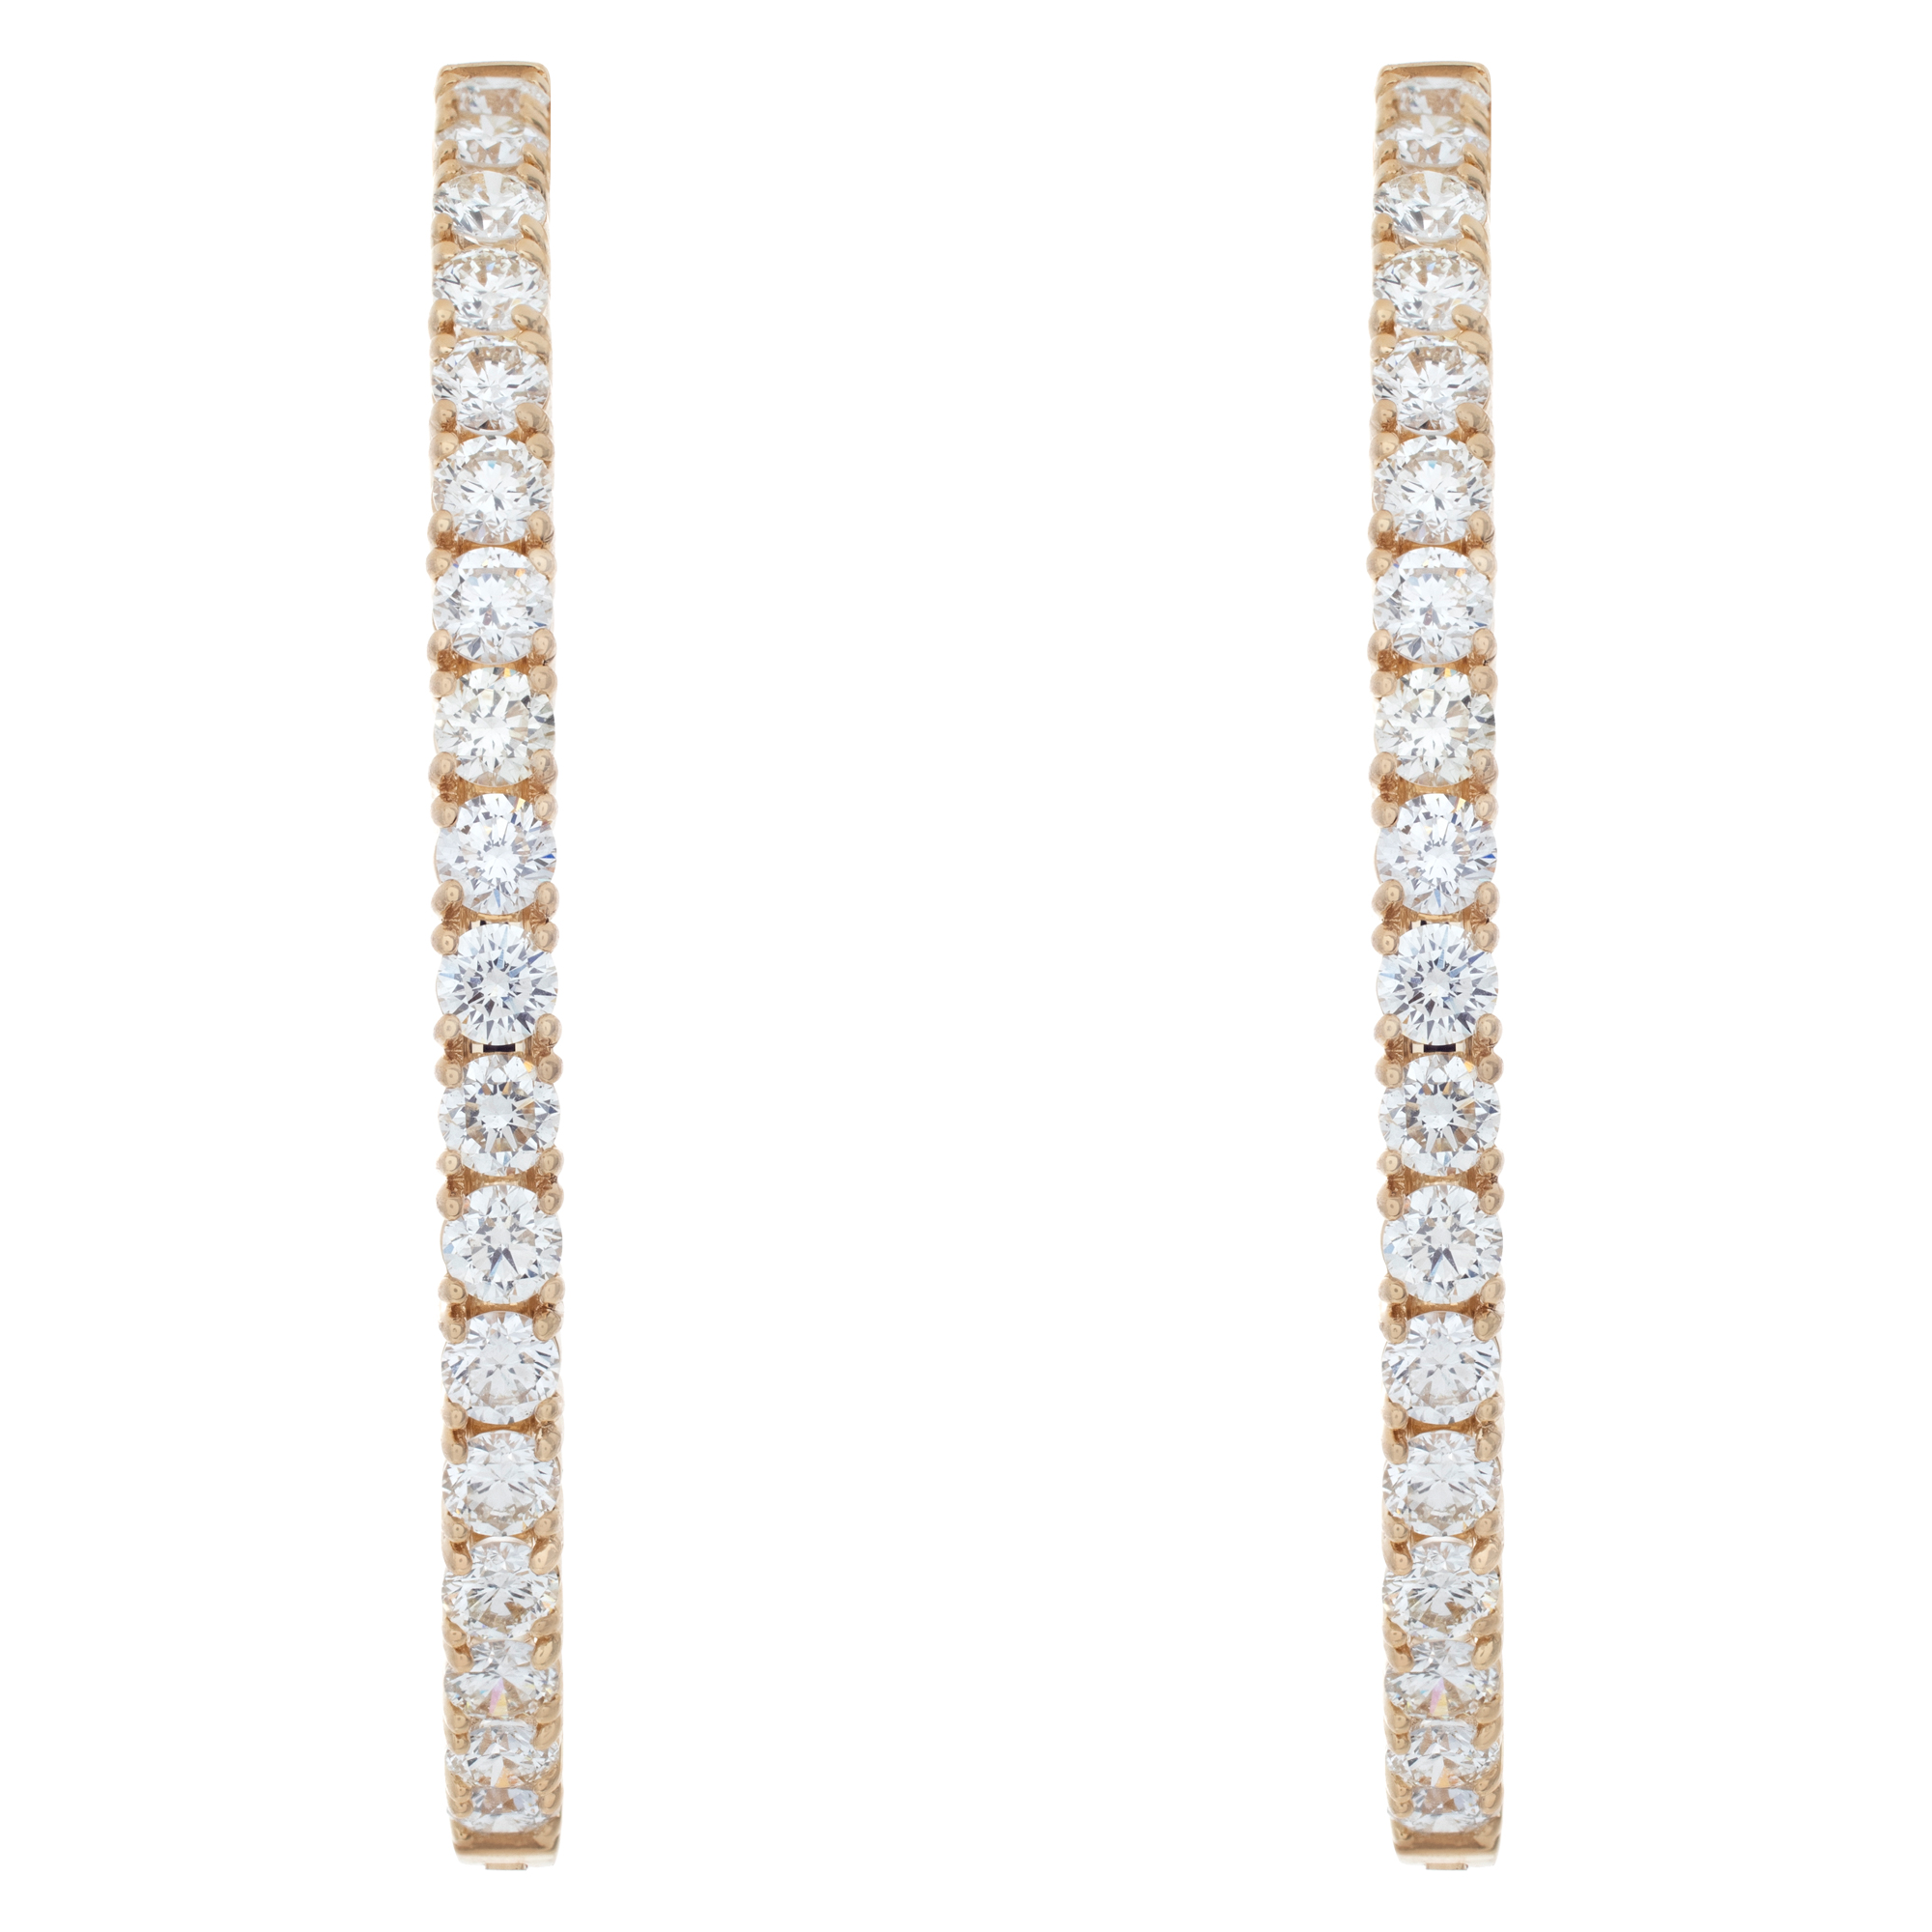 Diamond oval hoop earrings in 14k with 5.14 carats in round diamonds